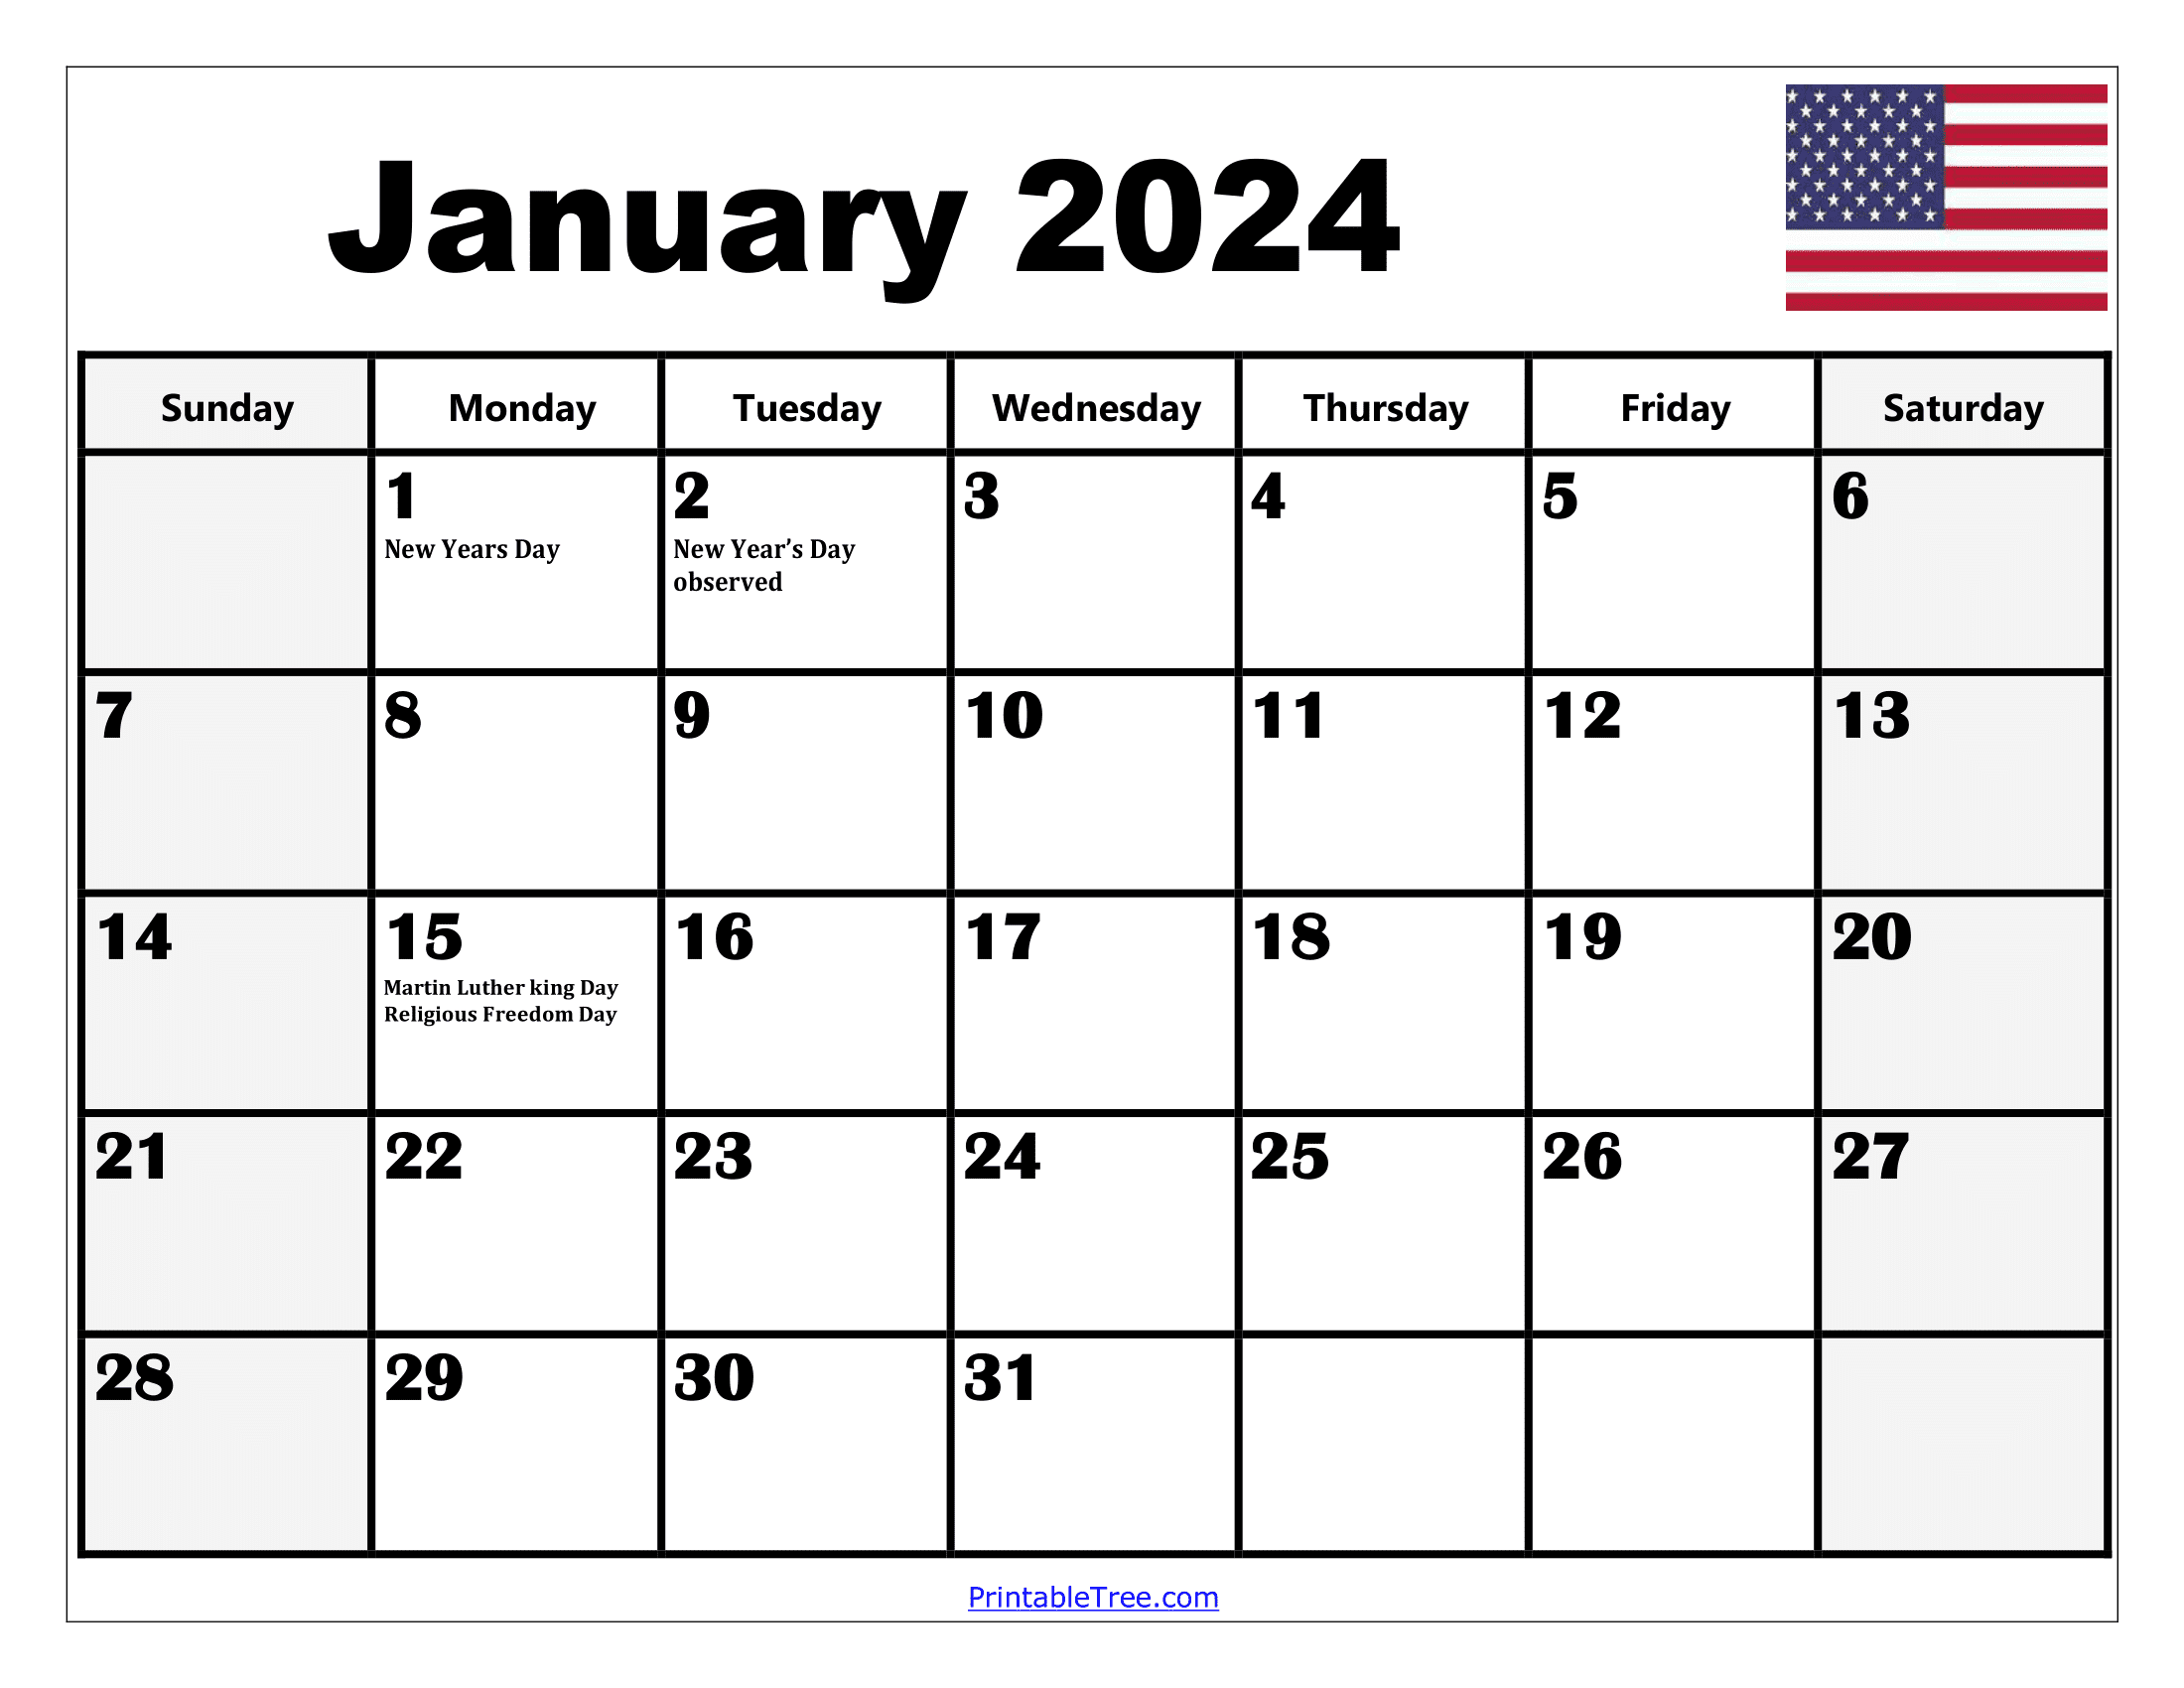 January 2024 Calendar Printable Pdf Template With Holidays for January Calendar 2024 With Holidays Printable